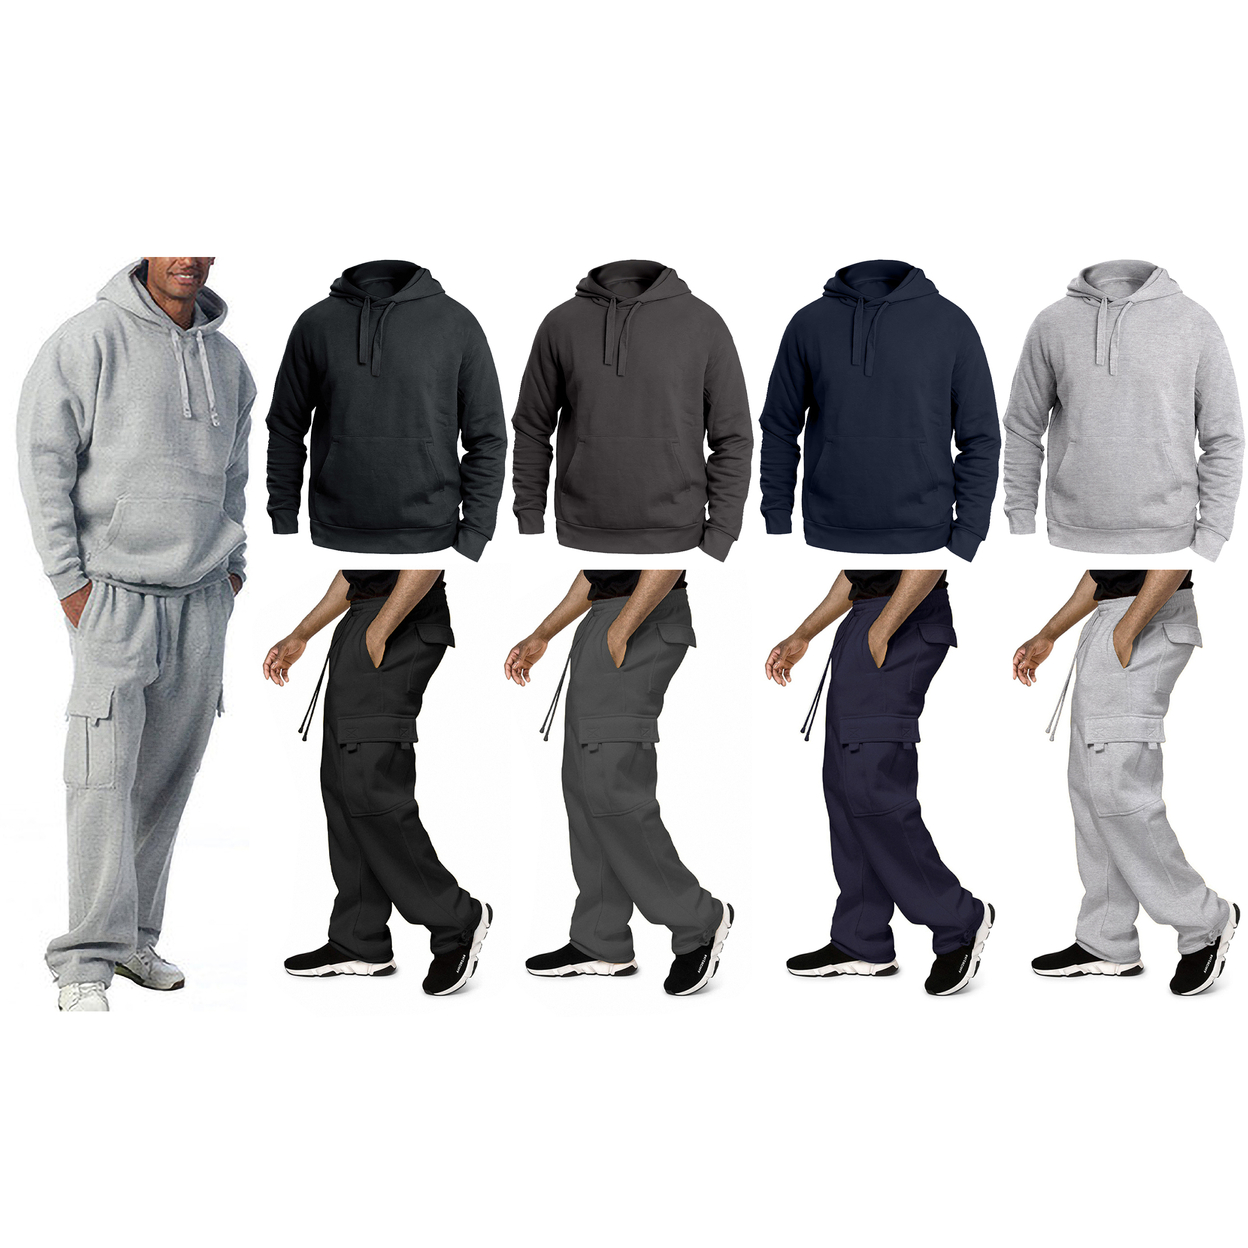 2-Pack: Men's Big & Tall Winter Warm Cozy Athletic Fleece Lined Multi-Pocket Cargo Sweatsuit - Black, Small